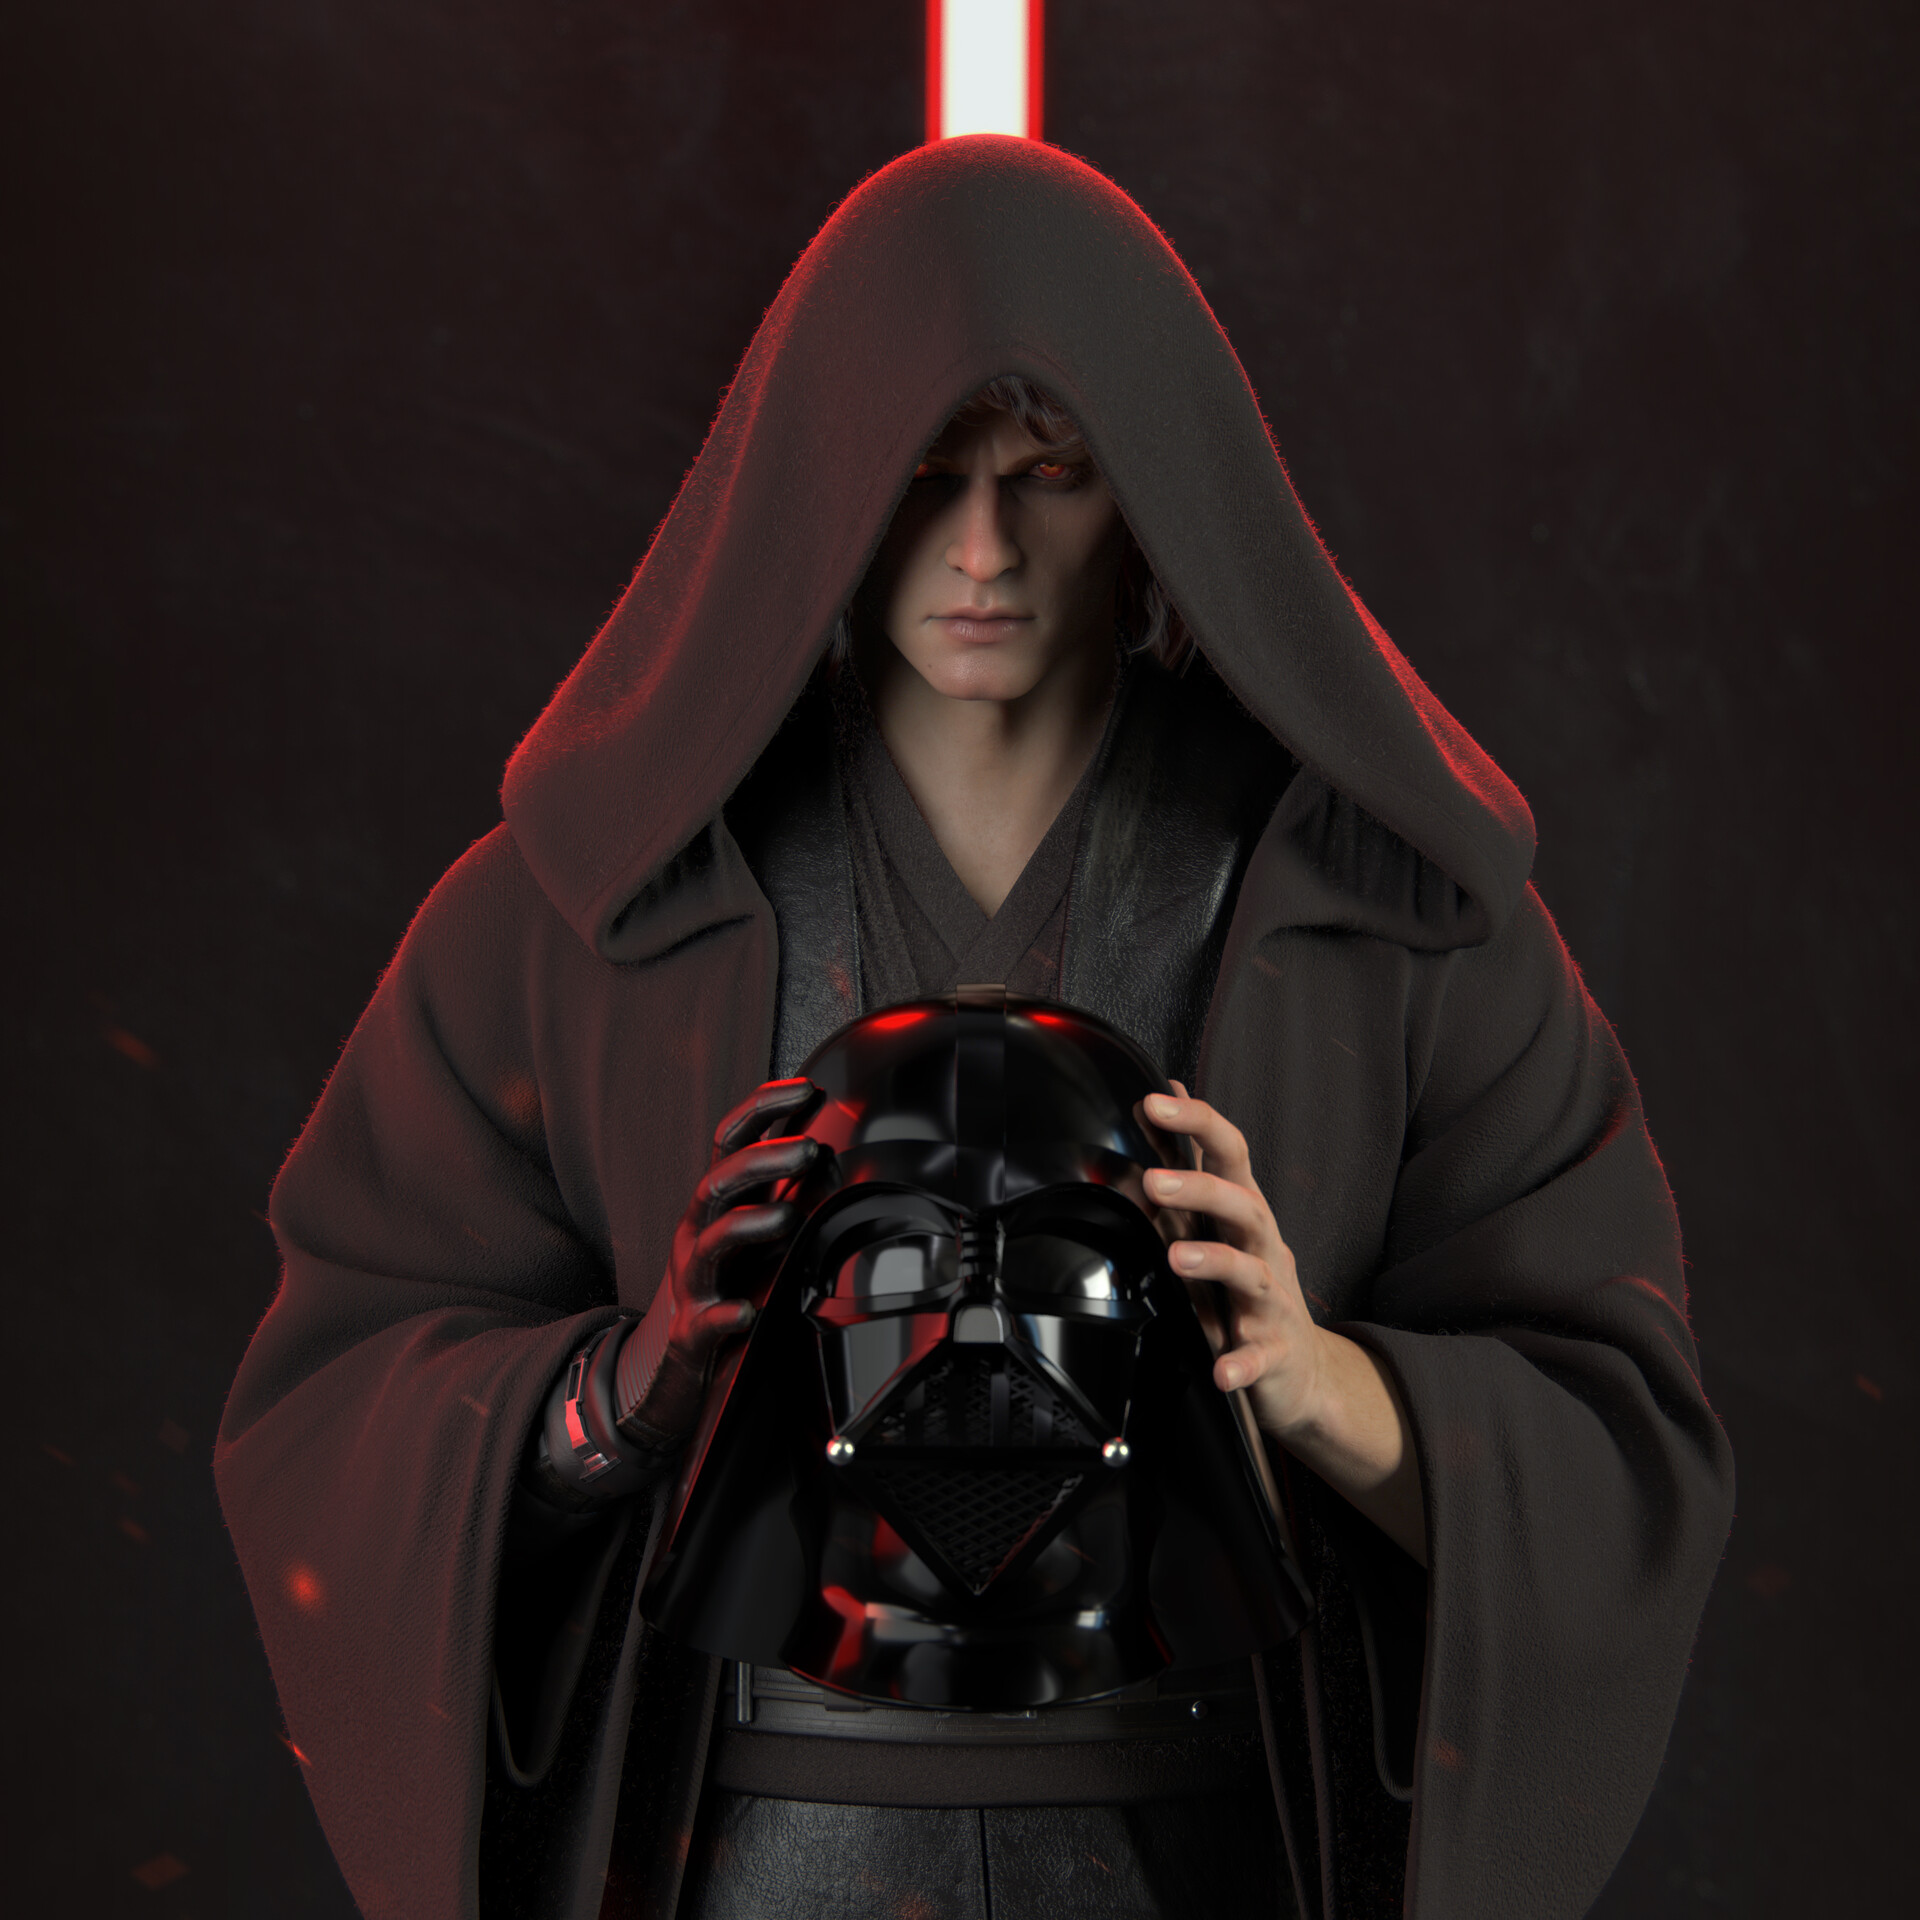 General 1920x1920 Ed Pantera CGI hoods men Star Wars Sith red light red eyes angry Anakin Skywalker helmet Darth Vader evil